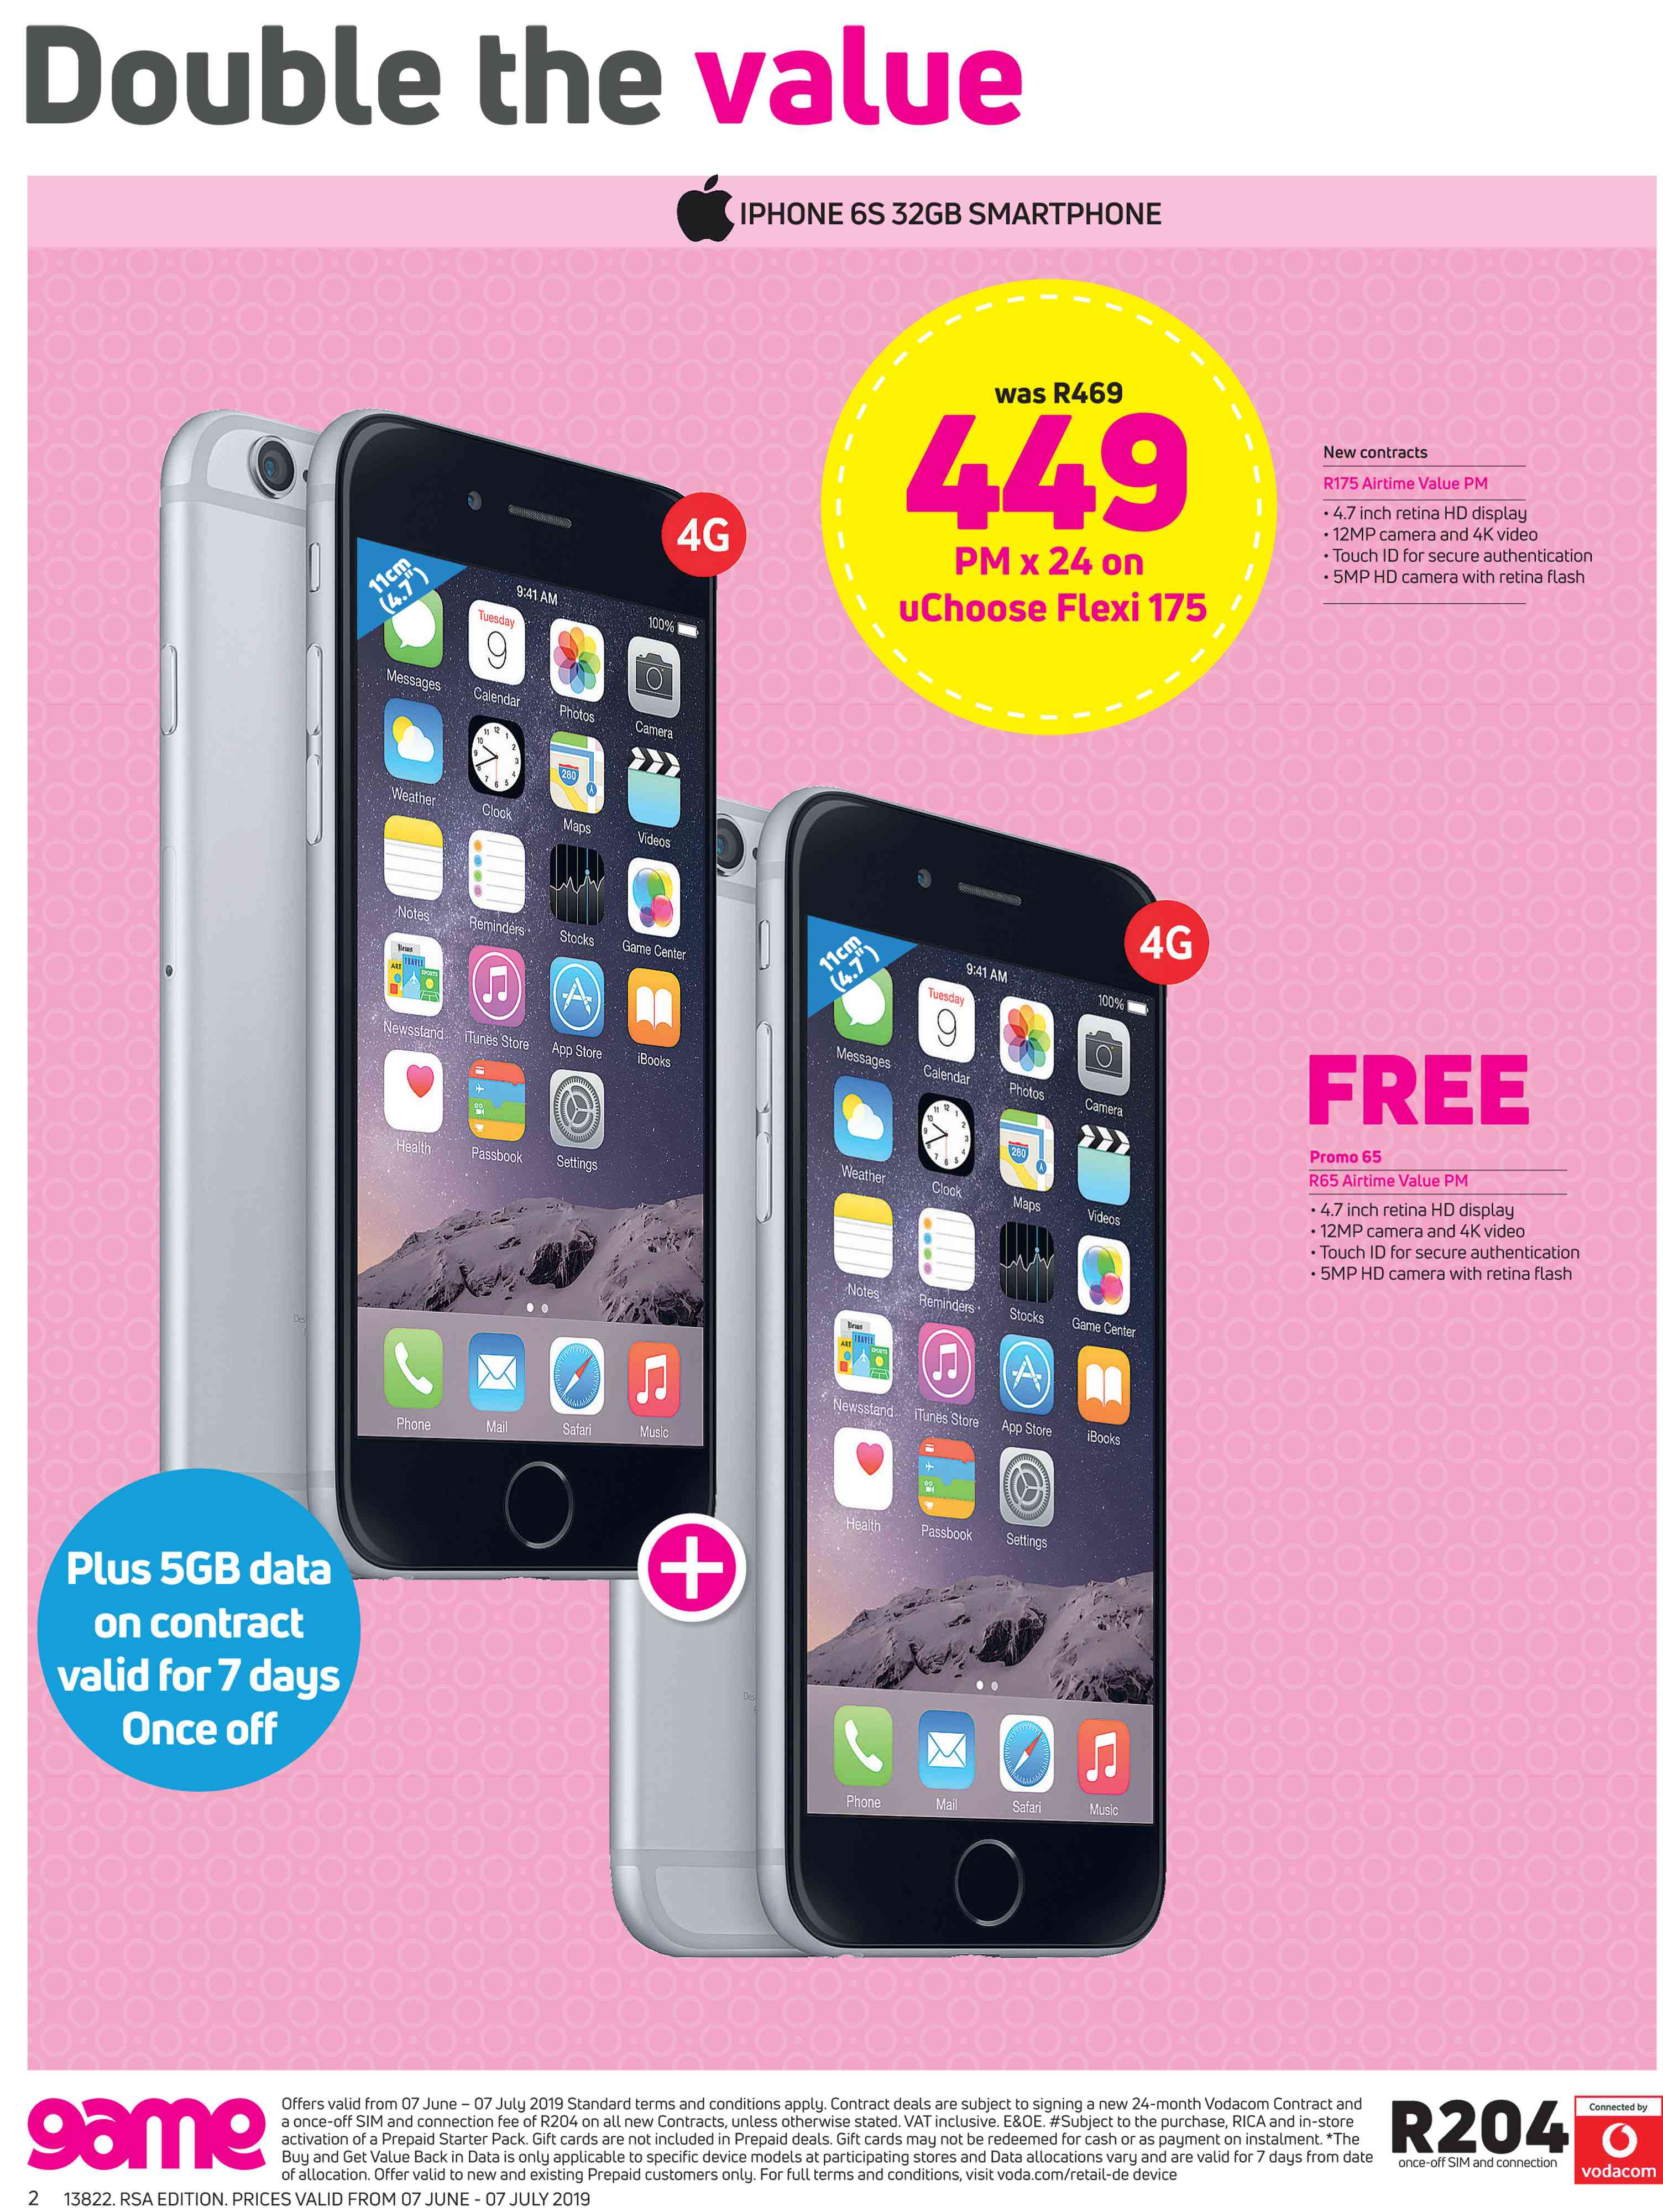 Special Apple iPhone 6S 32GB SmartphoneOn uChoose Flexi 175 & Free